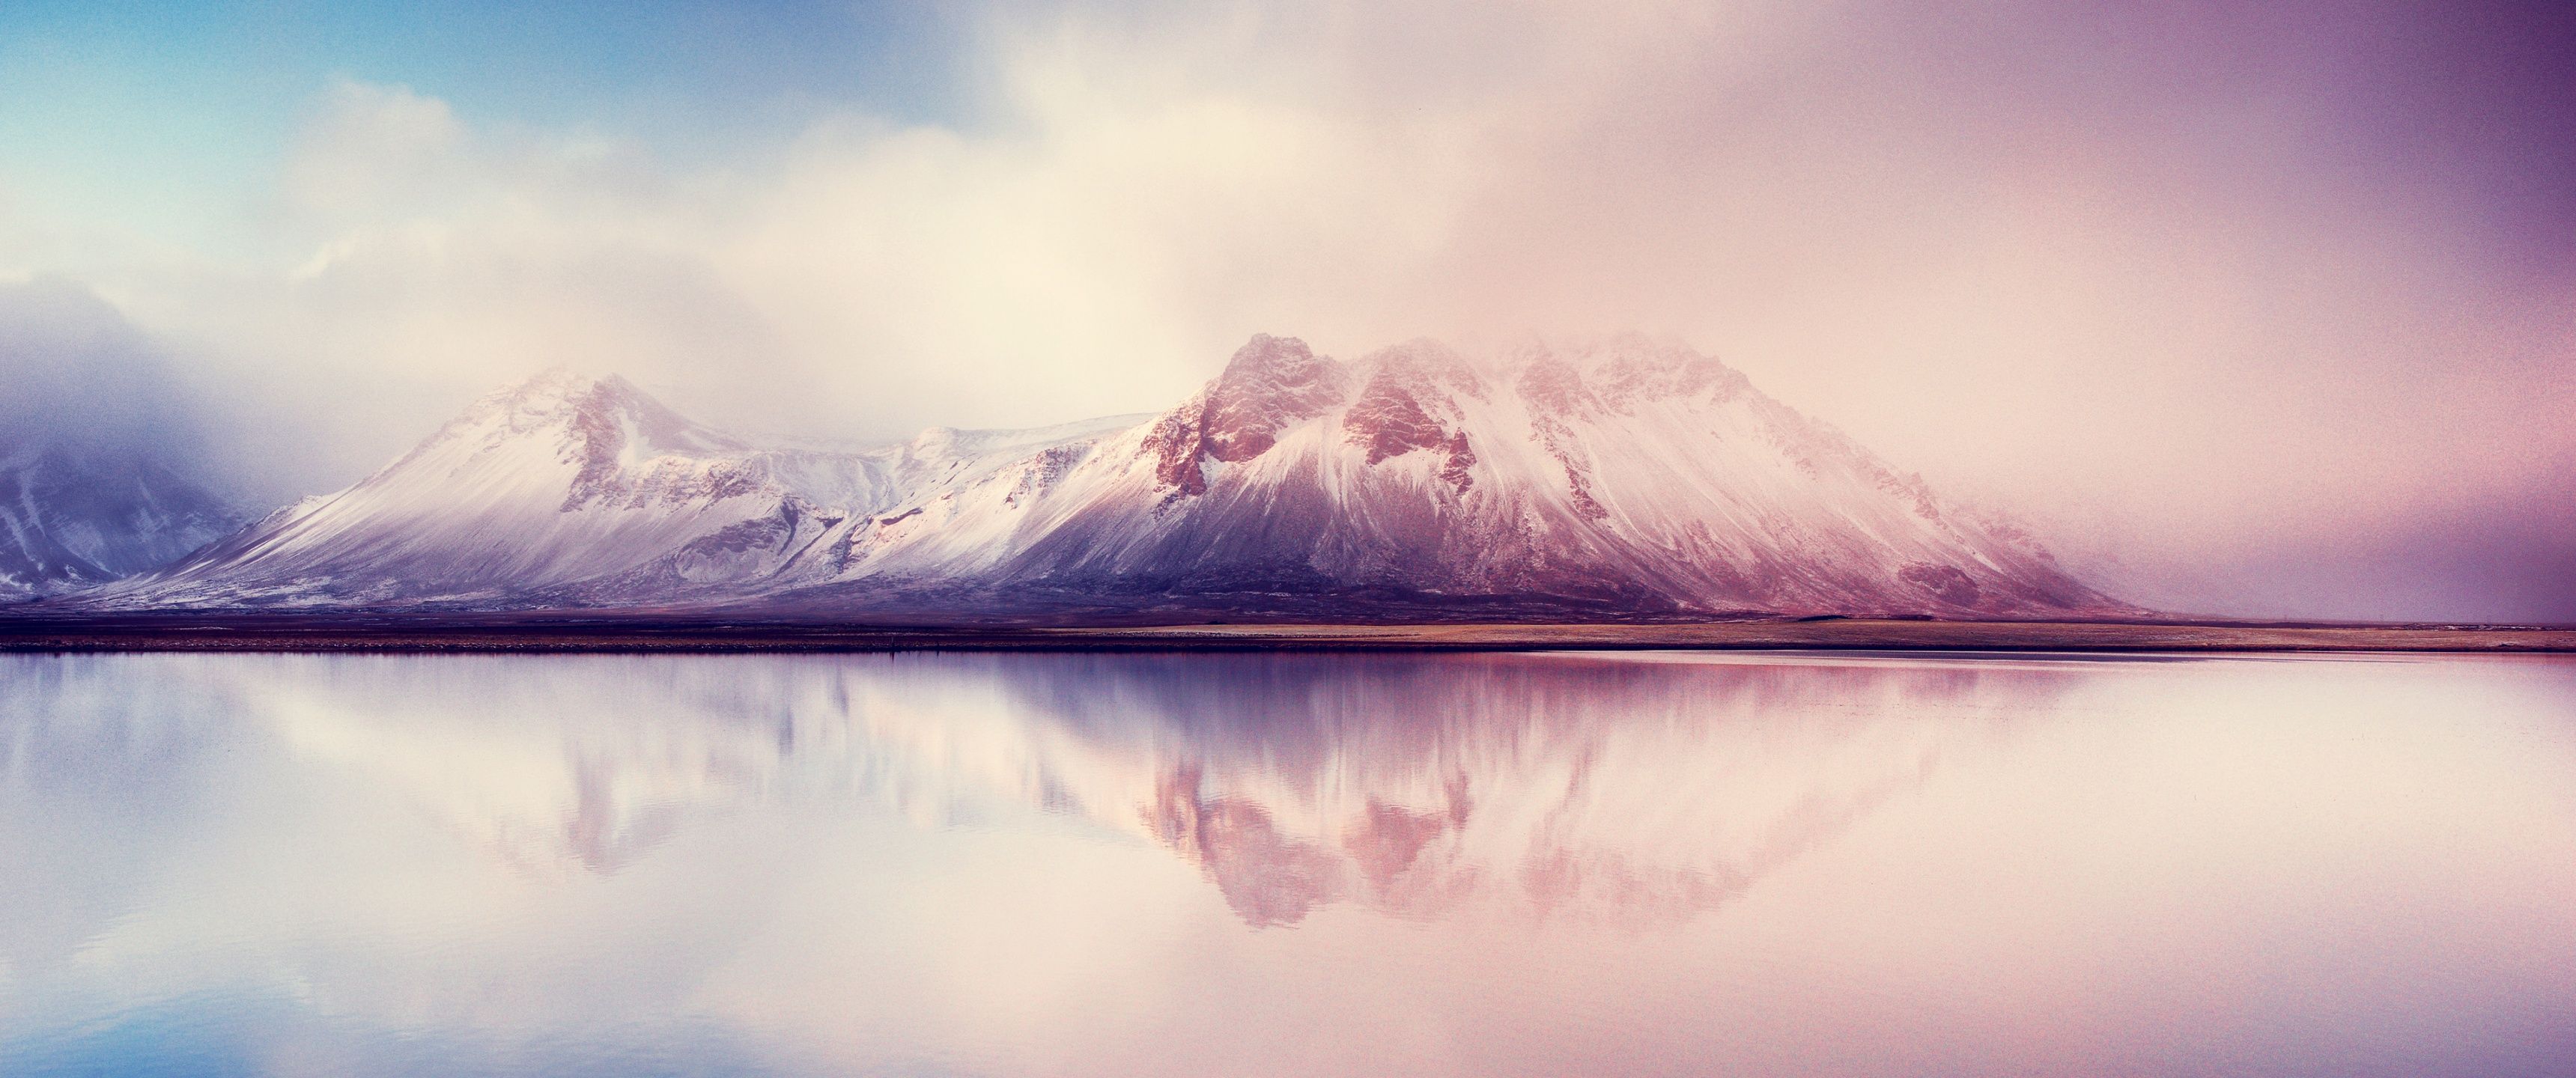 Mountains Wallpaper 4K, Aesthetic, Reflection, Mist